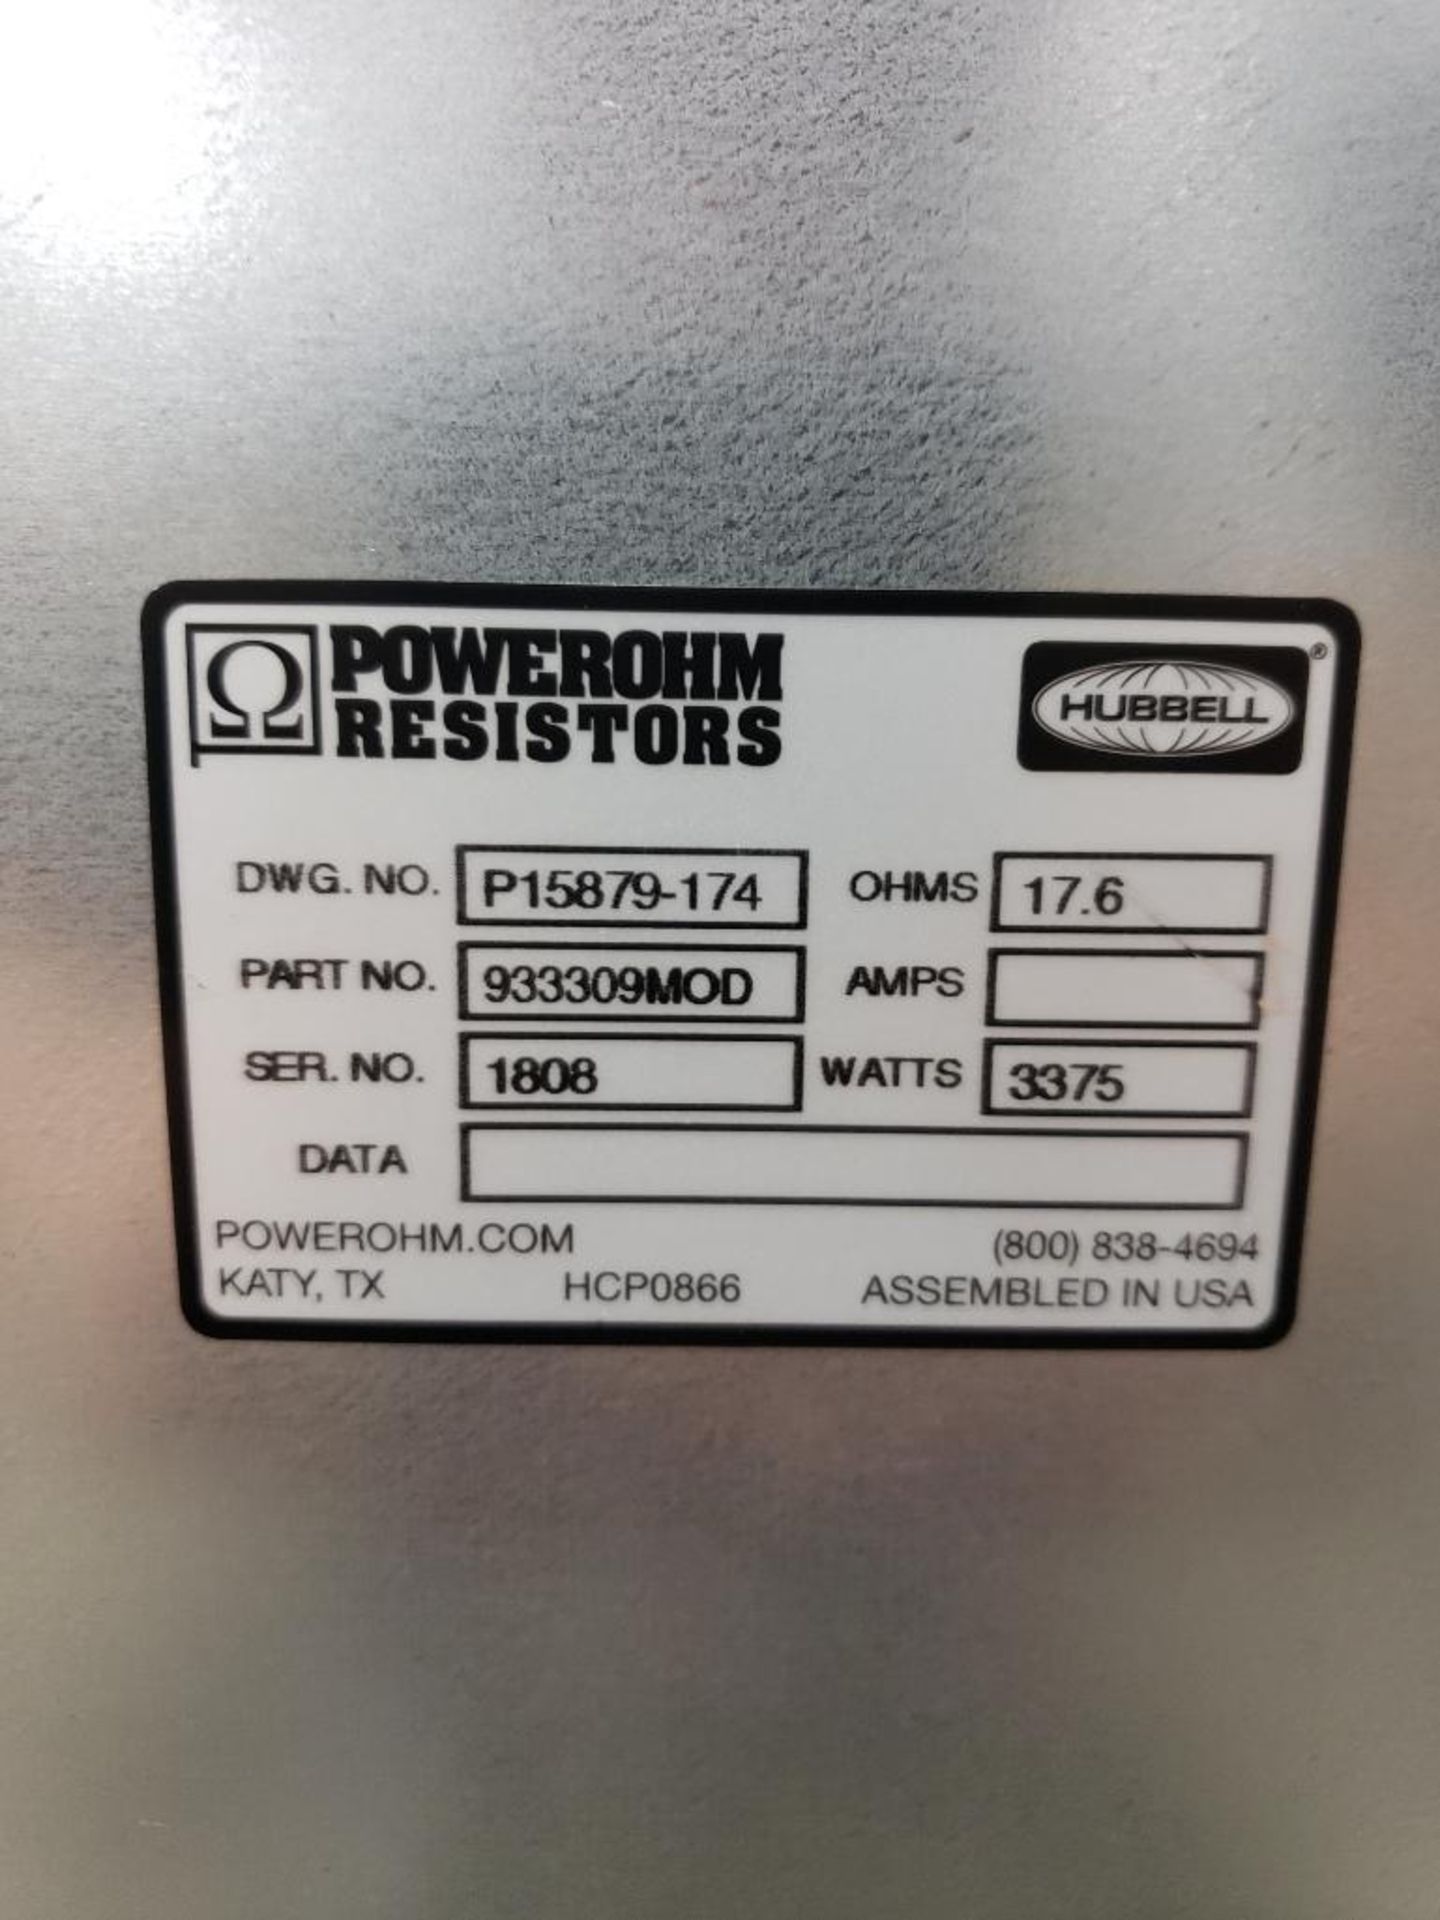 Powerohm Resistors Inc Hubbell 3375 watt brake. 17.5ohm. Part number 933309MOD. New. - Image 2 of 2